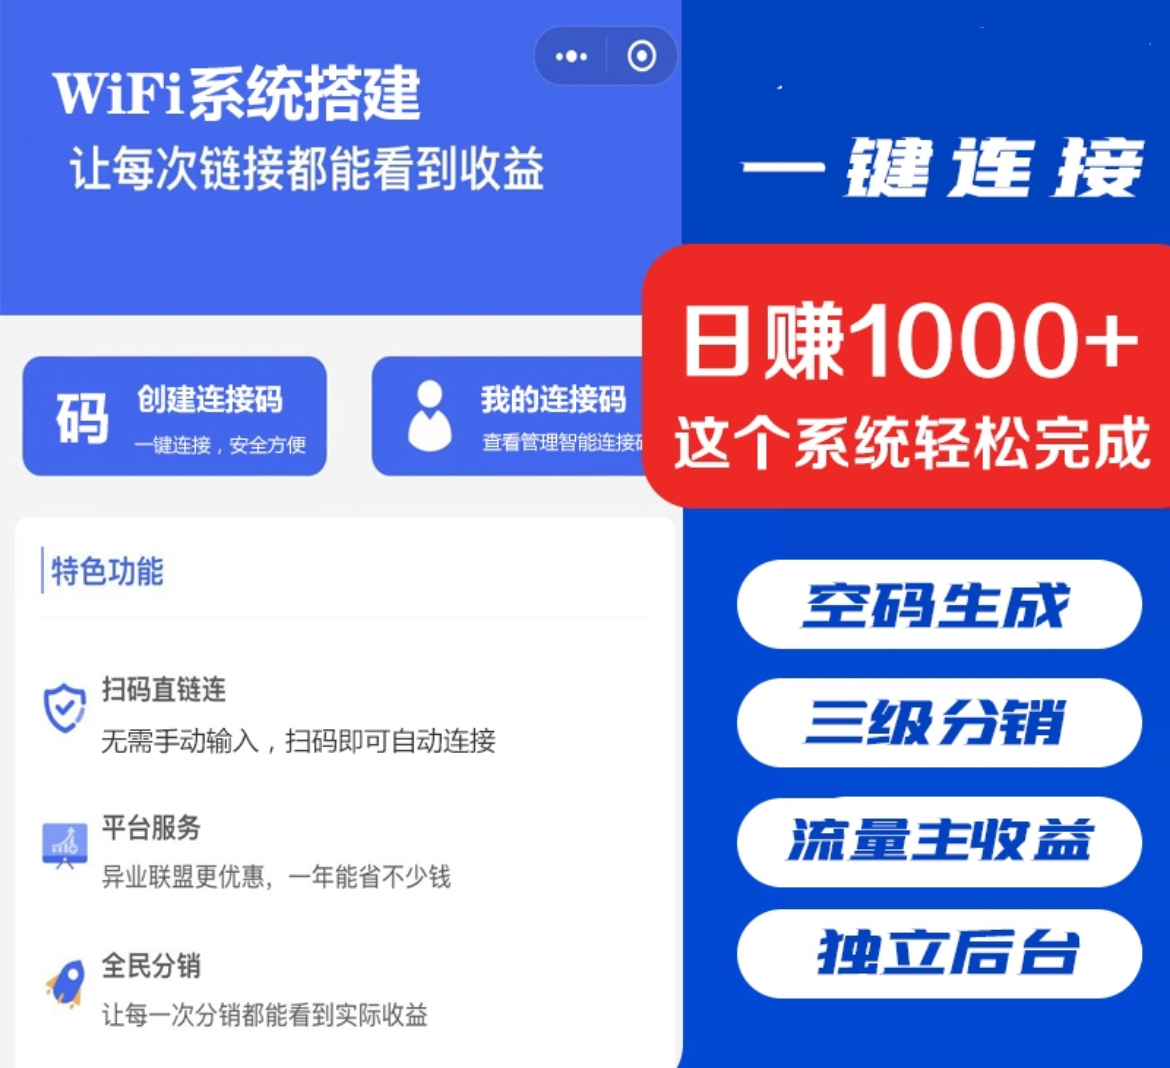 WiFi营销小程序共享WiFi门店一键免密码连接WiFi流量主分销小程序-云创网